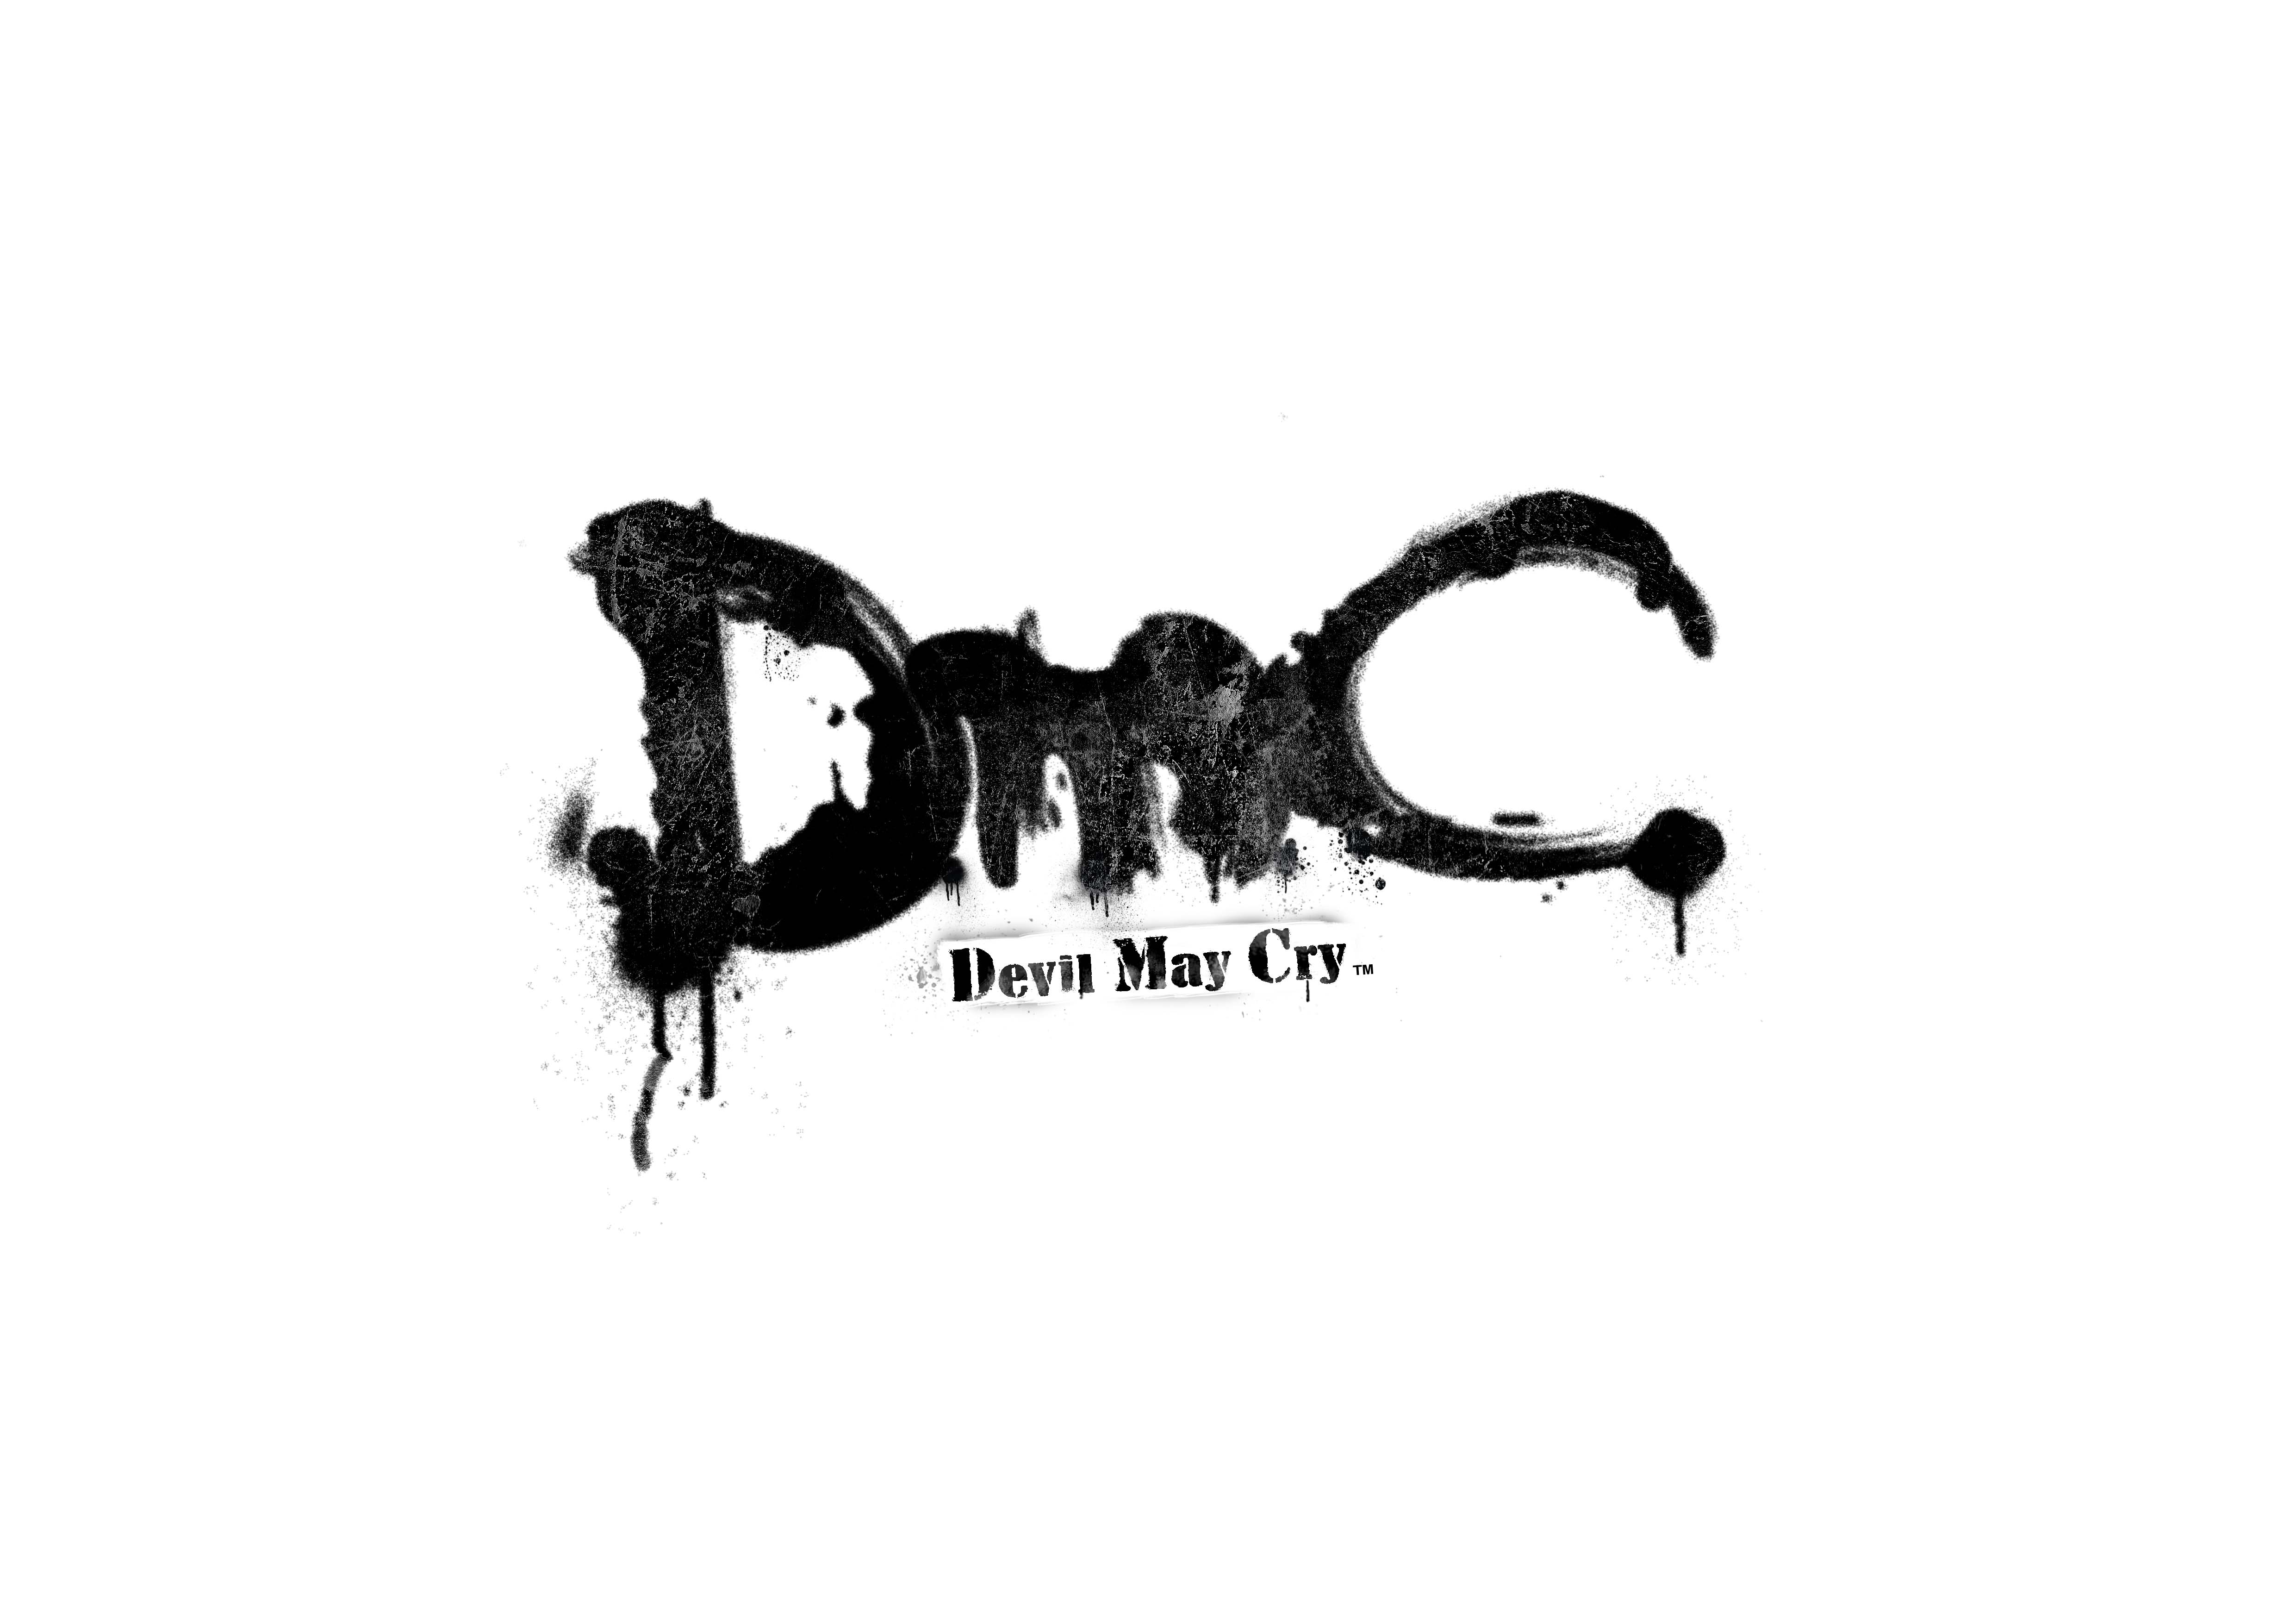 DmC: Devil May Cry completou 10 anos de vida e a Ninja Theory